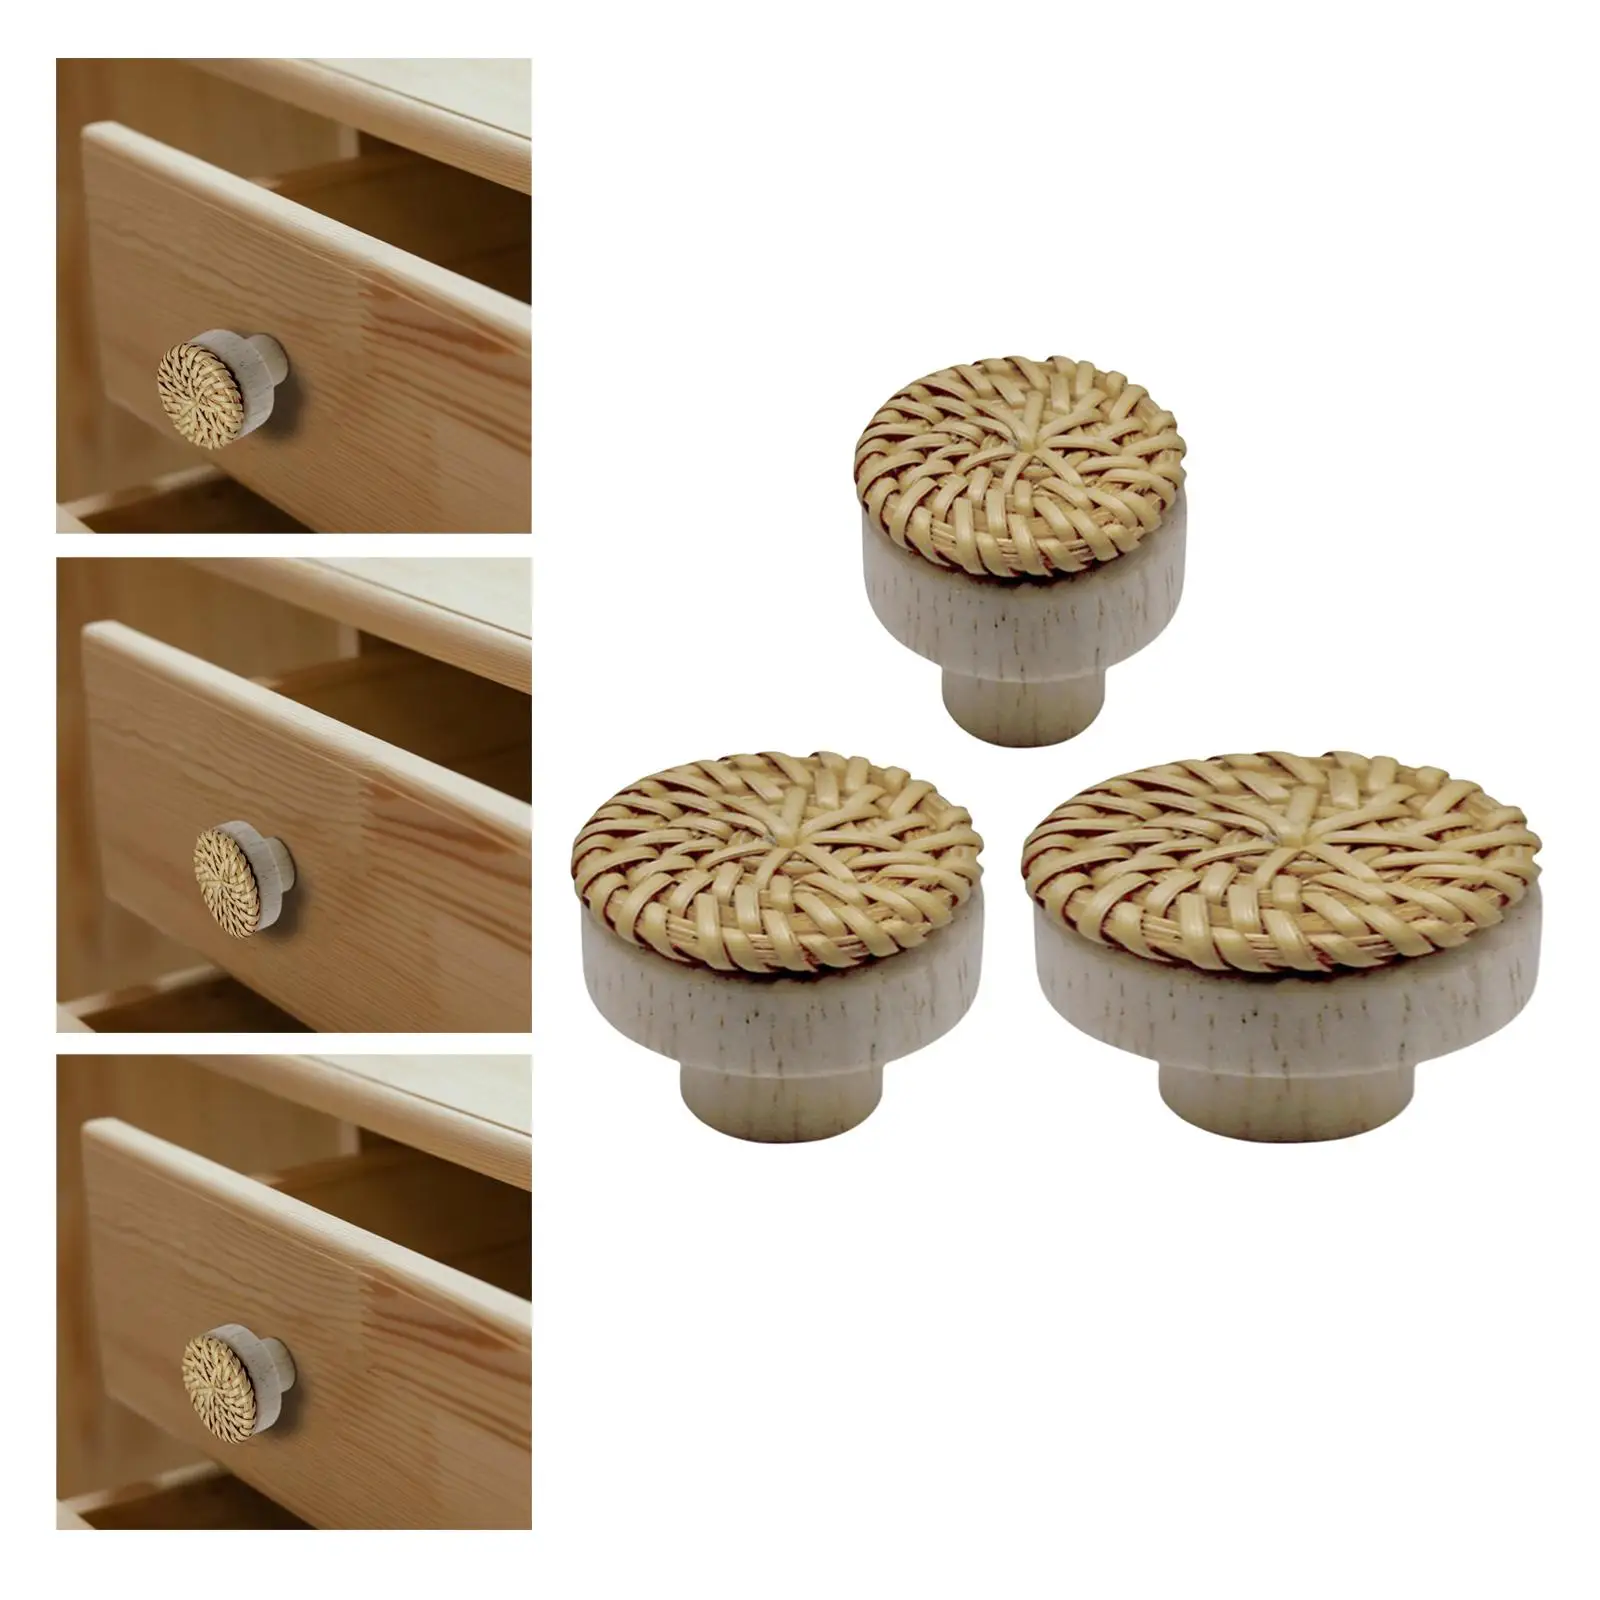 Boho Dresser Knob Drawer Pulls Decoration Wood Retro Style Accessories Rustic Handcraft Home Rattan Cabinet Handles for Kitchen